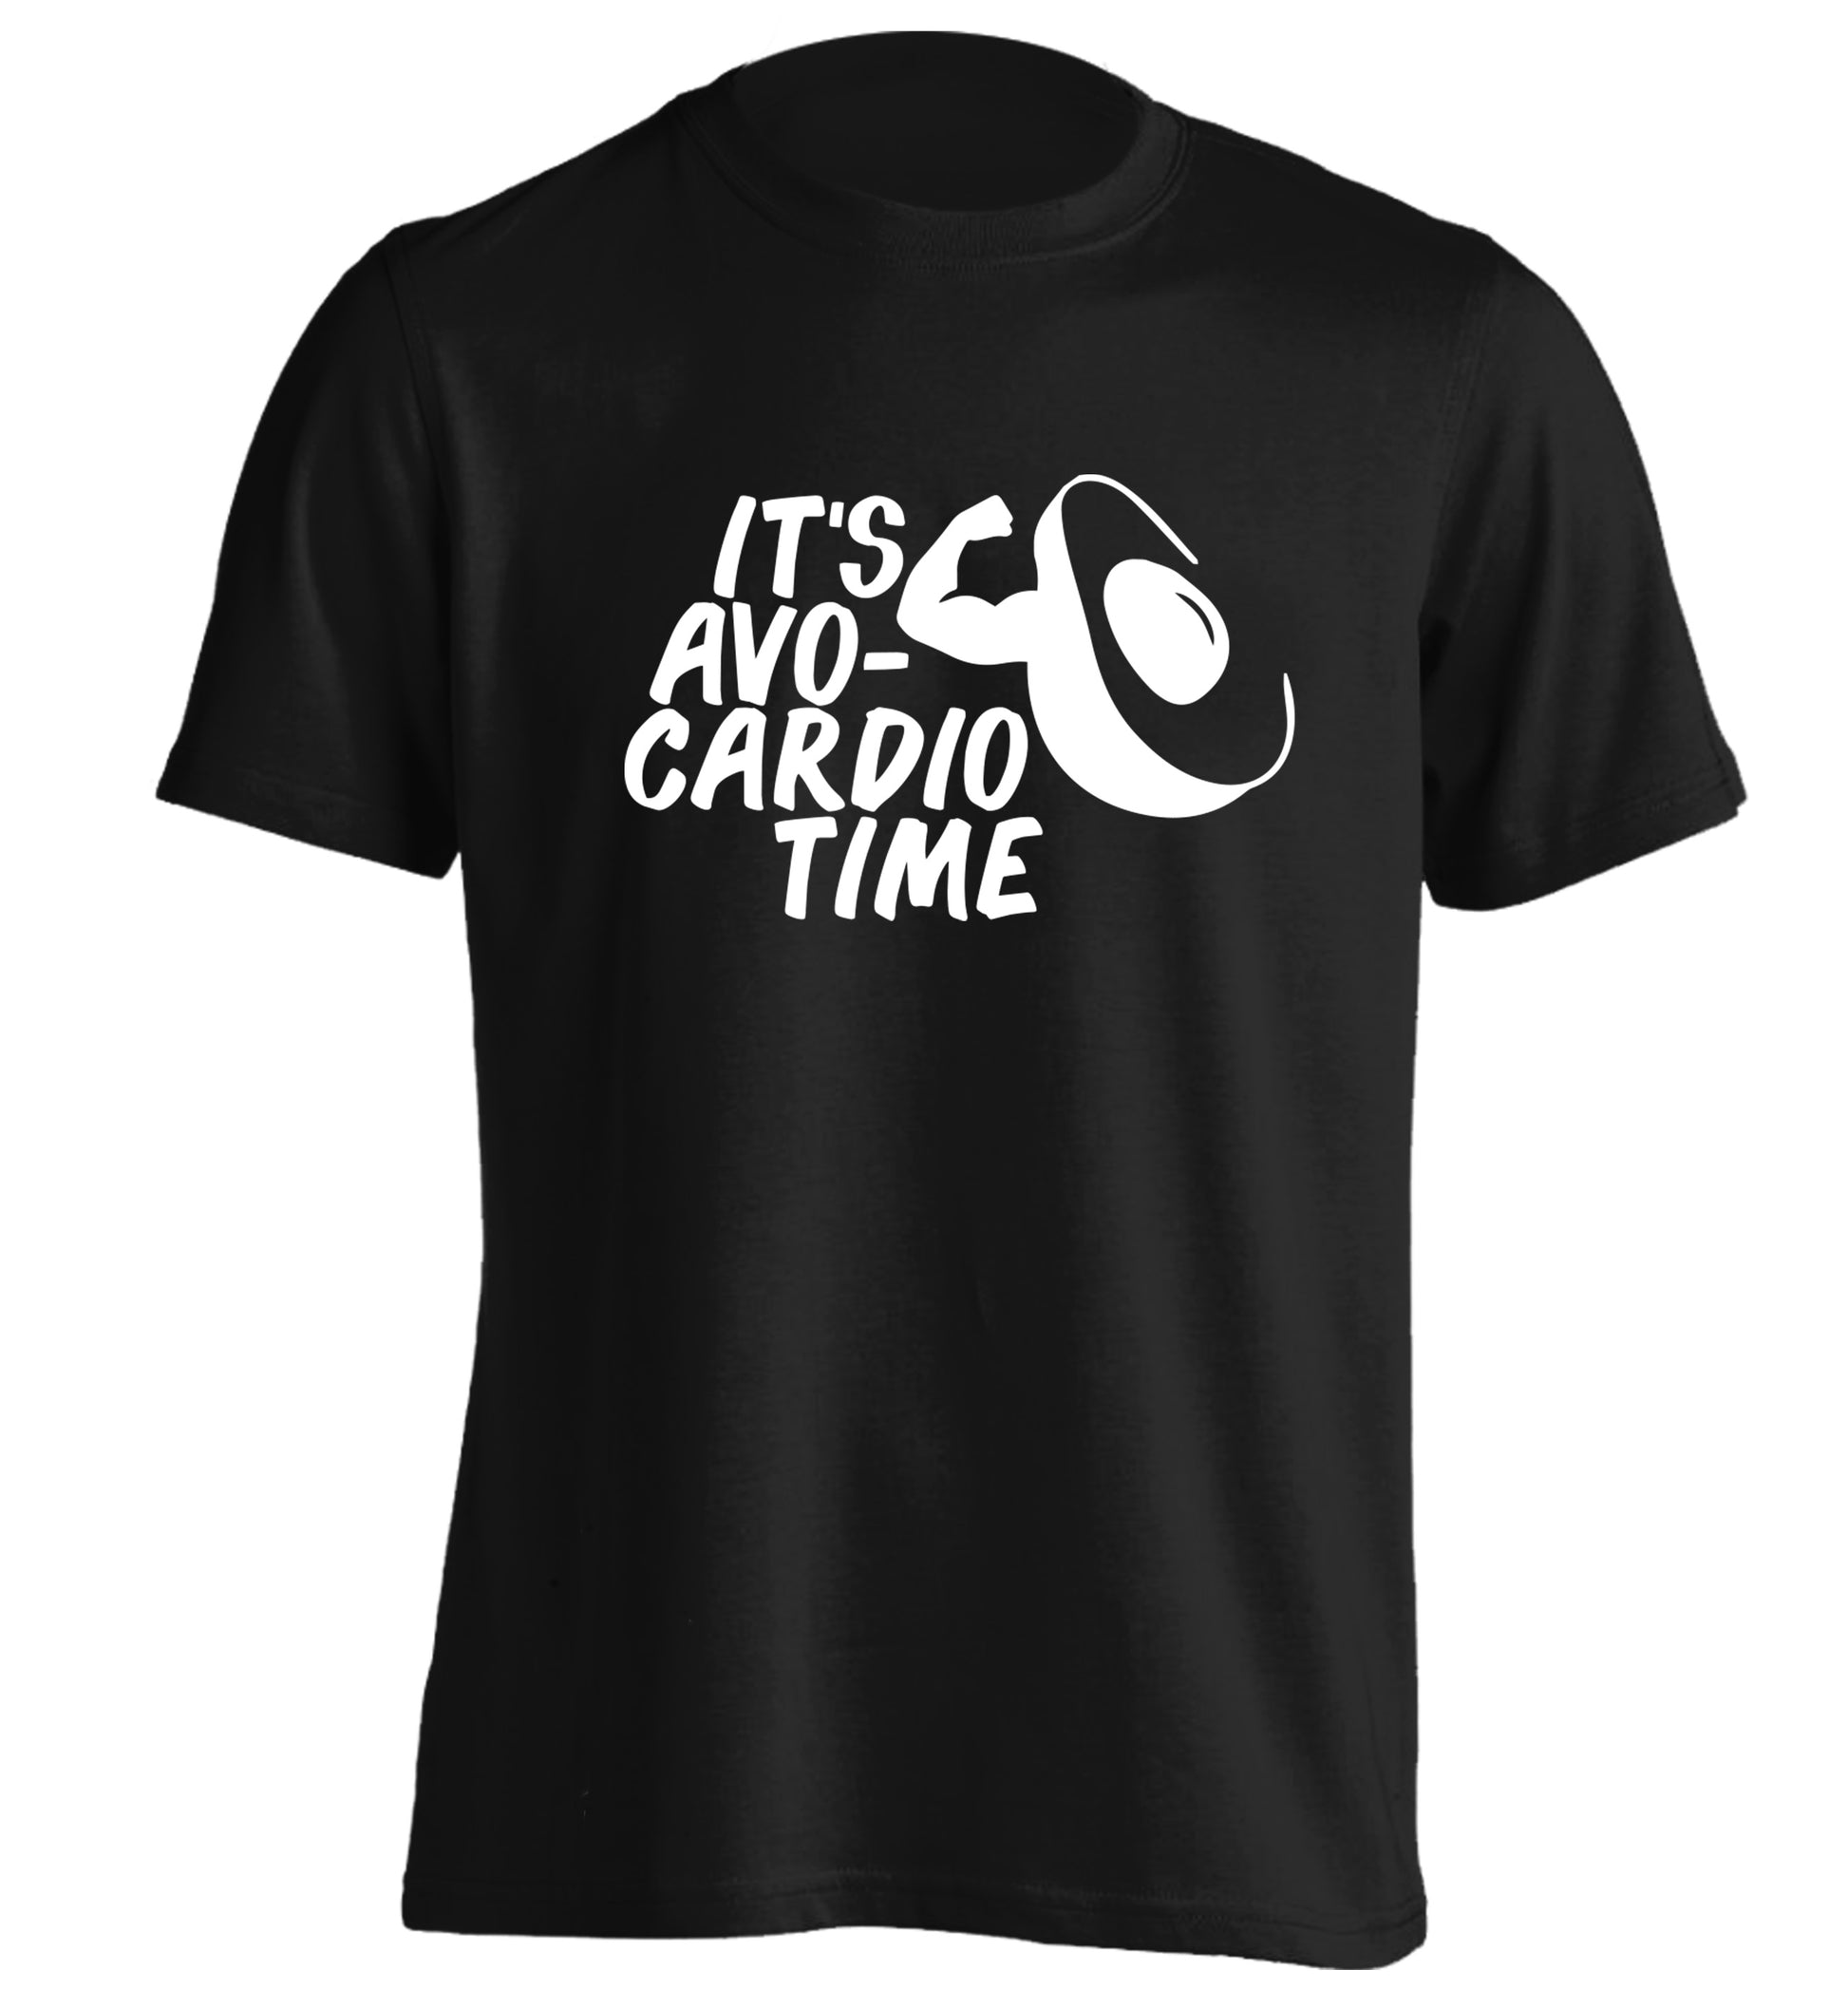 It's avo-cardio time adults unisex black Tshirt 2XL